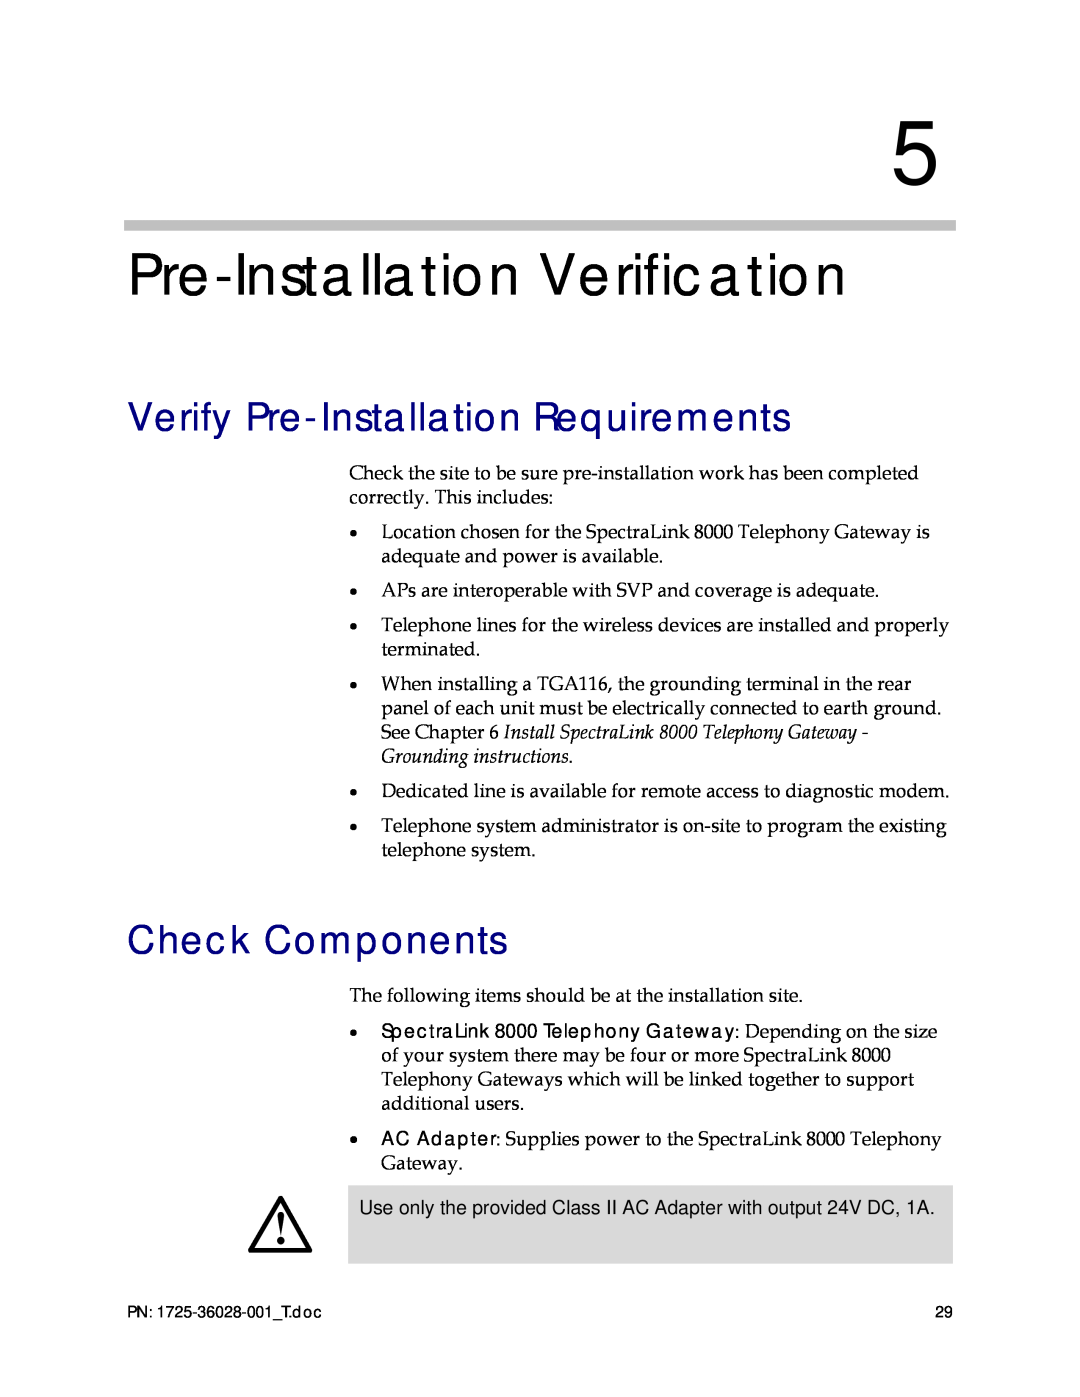 Polycom 1725-36028-001 manual Pre-Installation Verification, Verify Pre-Installation Requirements, Check Components 